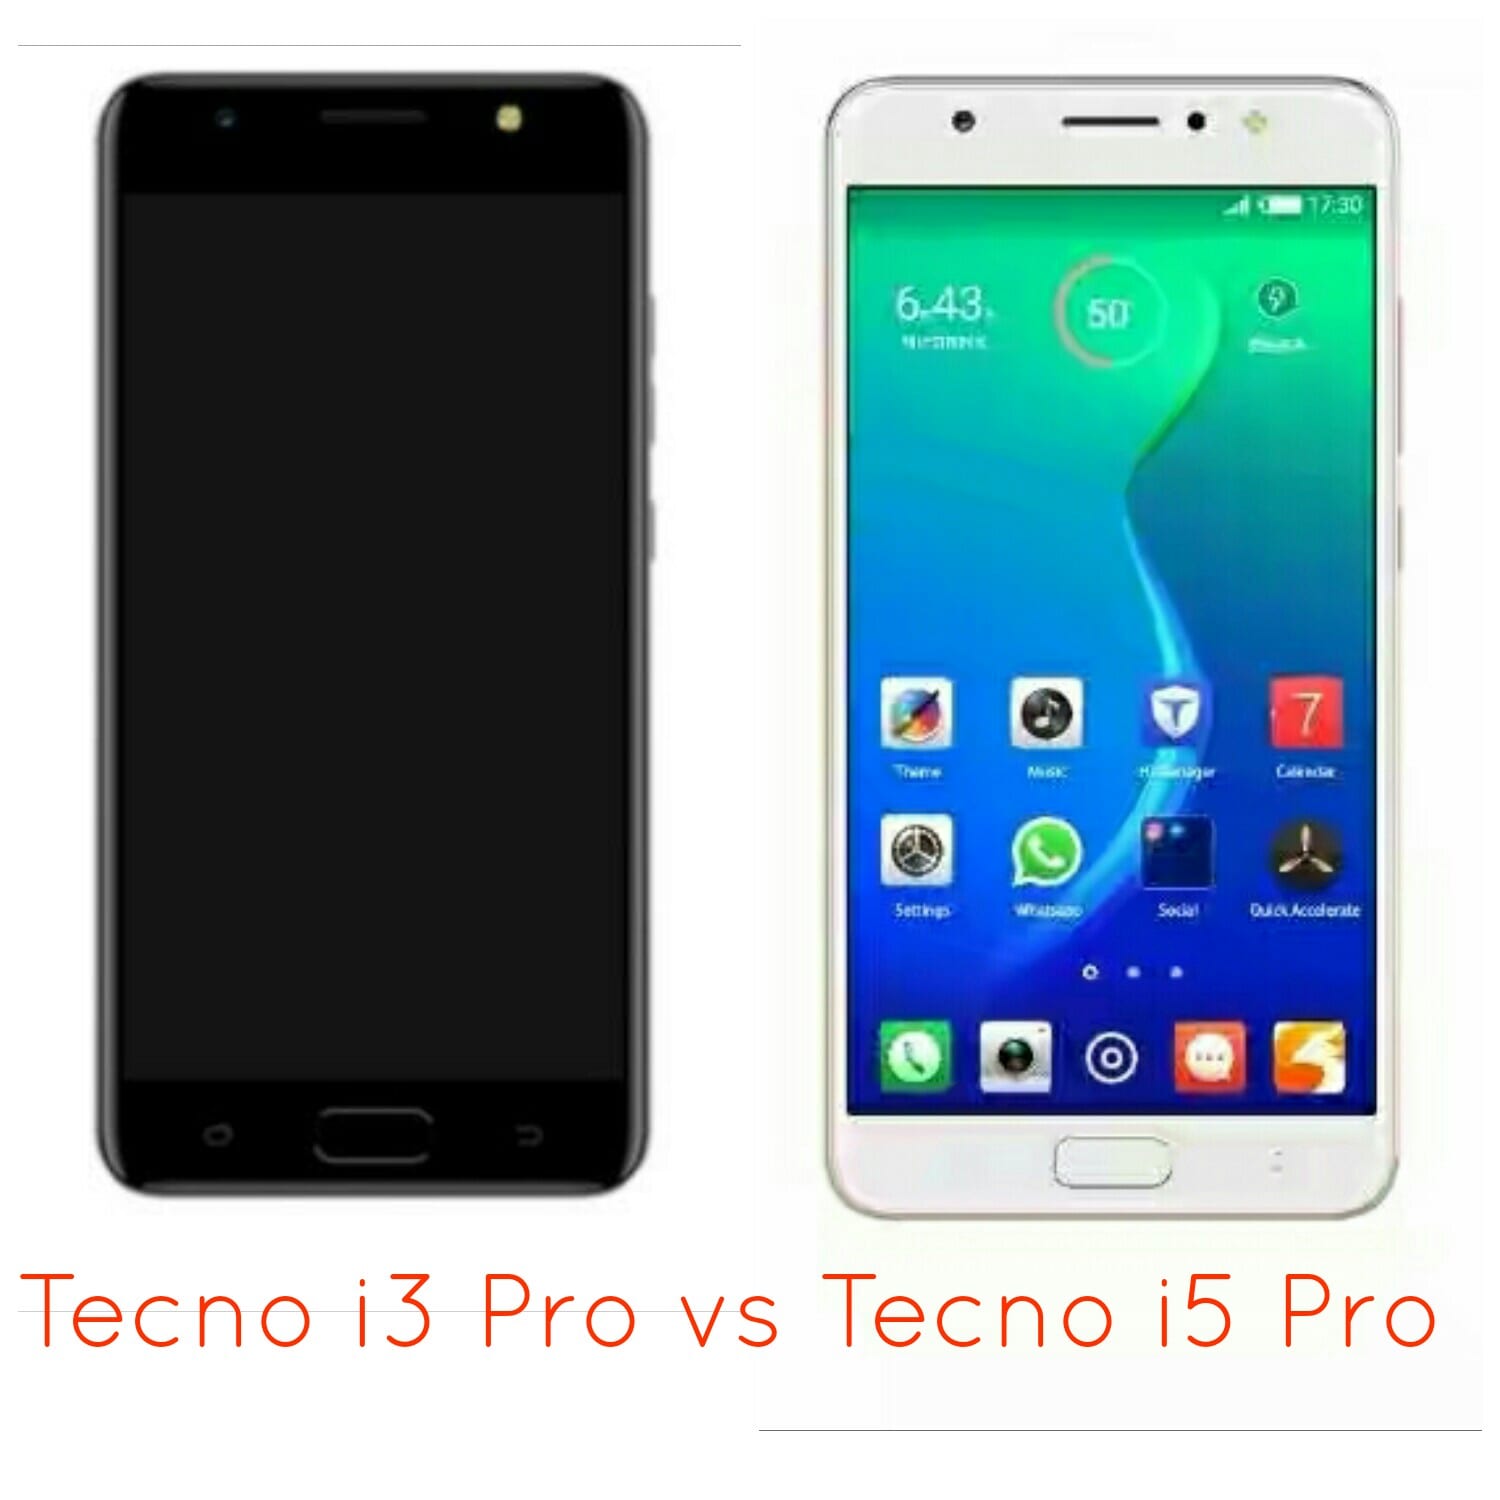 Tecno i3 Pro vs Tecno i5 Pro